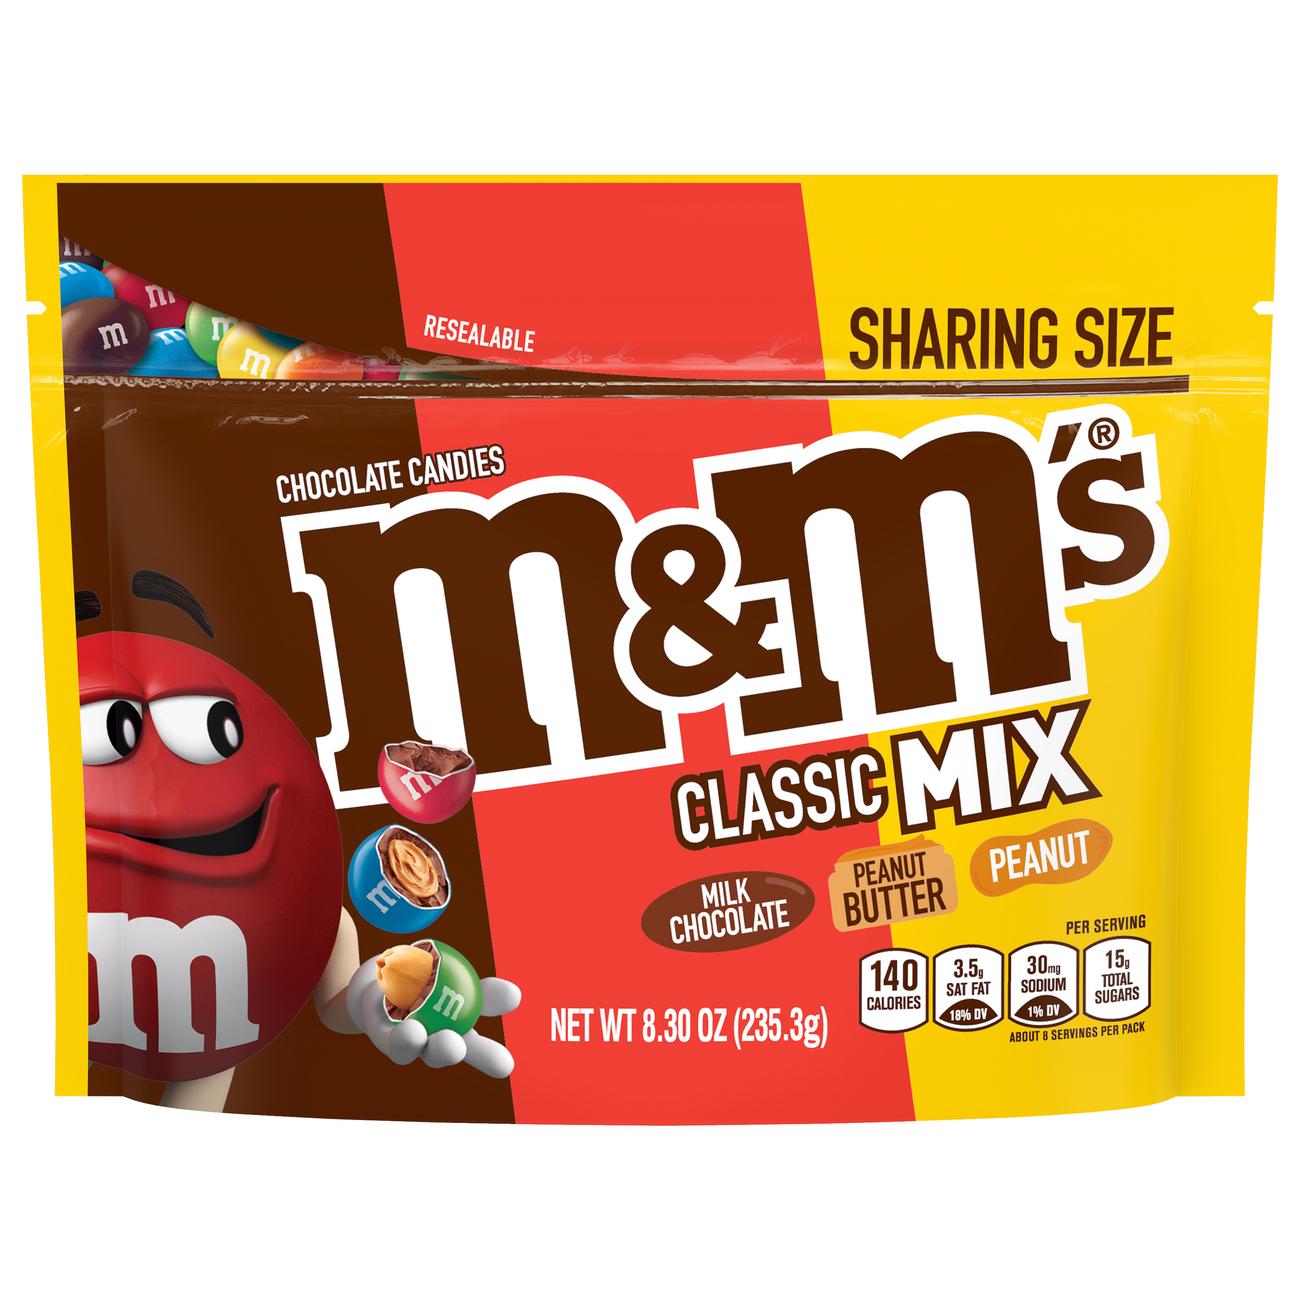 M&M's Chocolate Candies, Fudge Brownie, Share Size